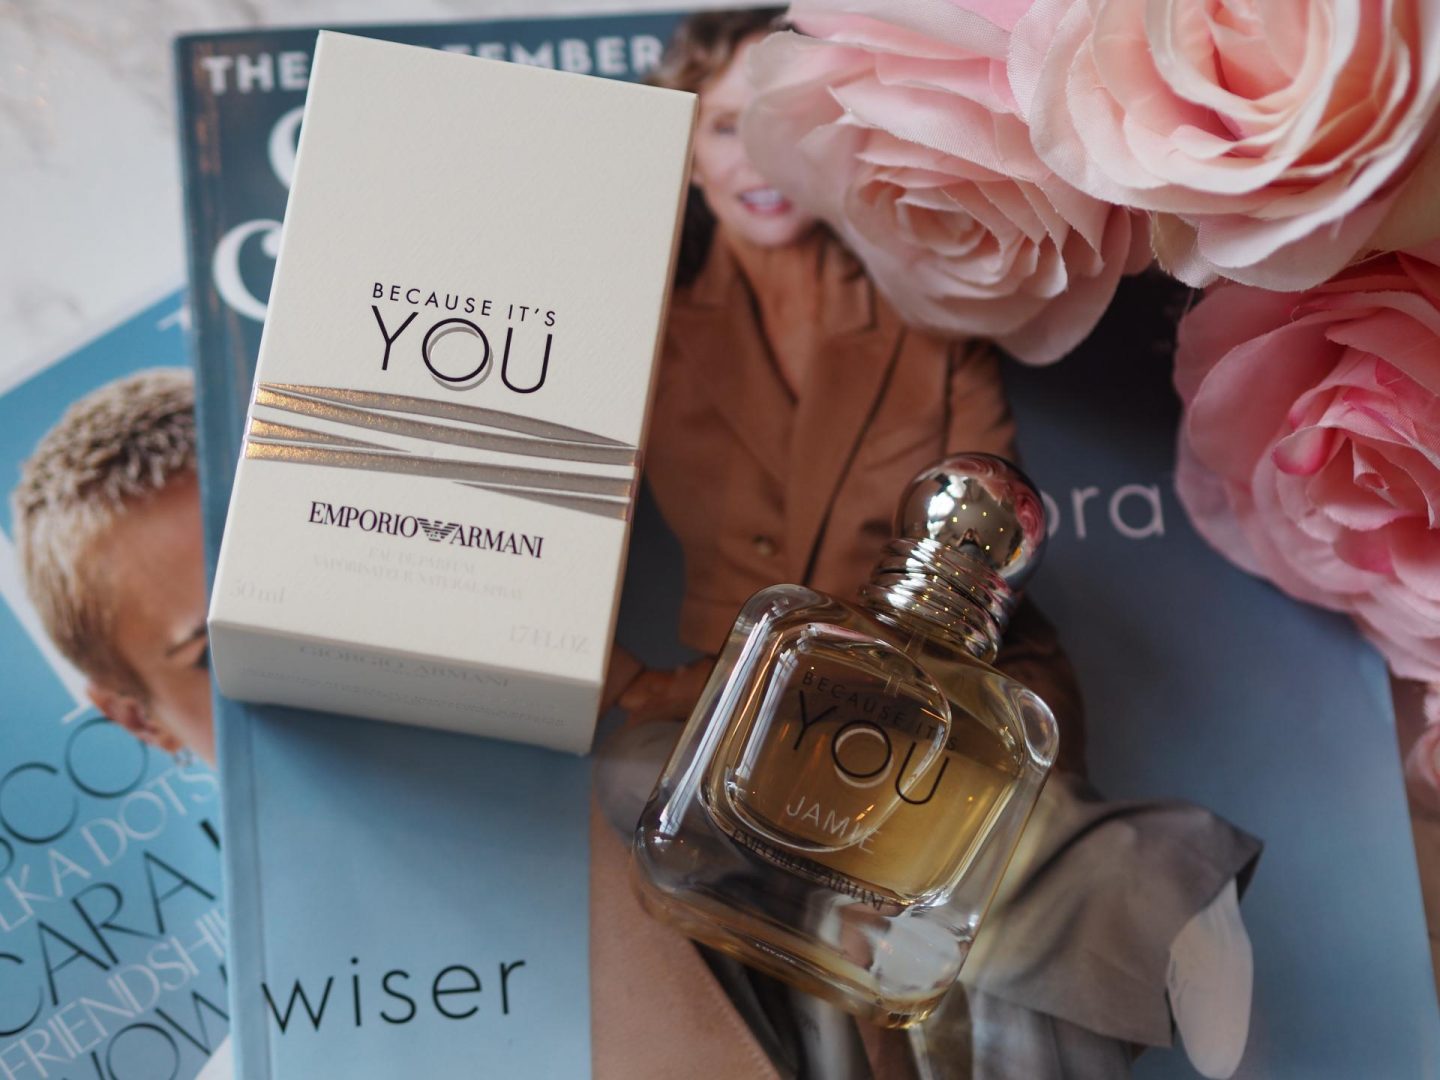 Feel Good Beauty - Product: Emporio Armani Because It’s You Eau De Parfum